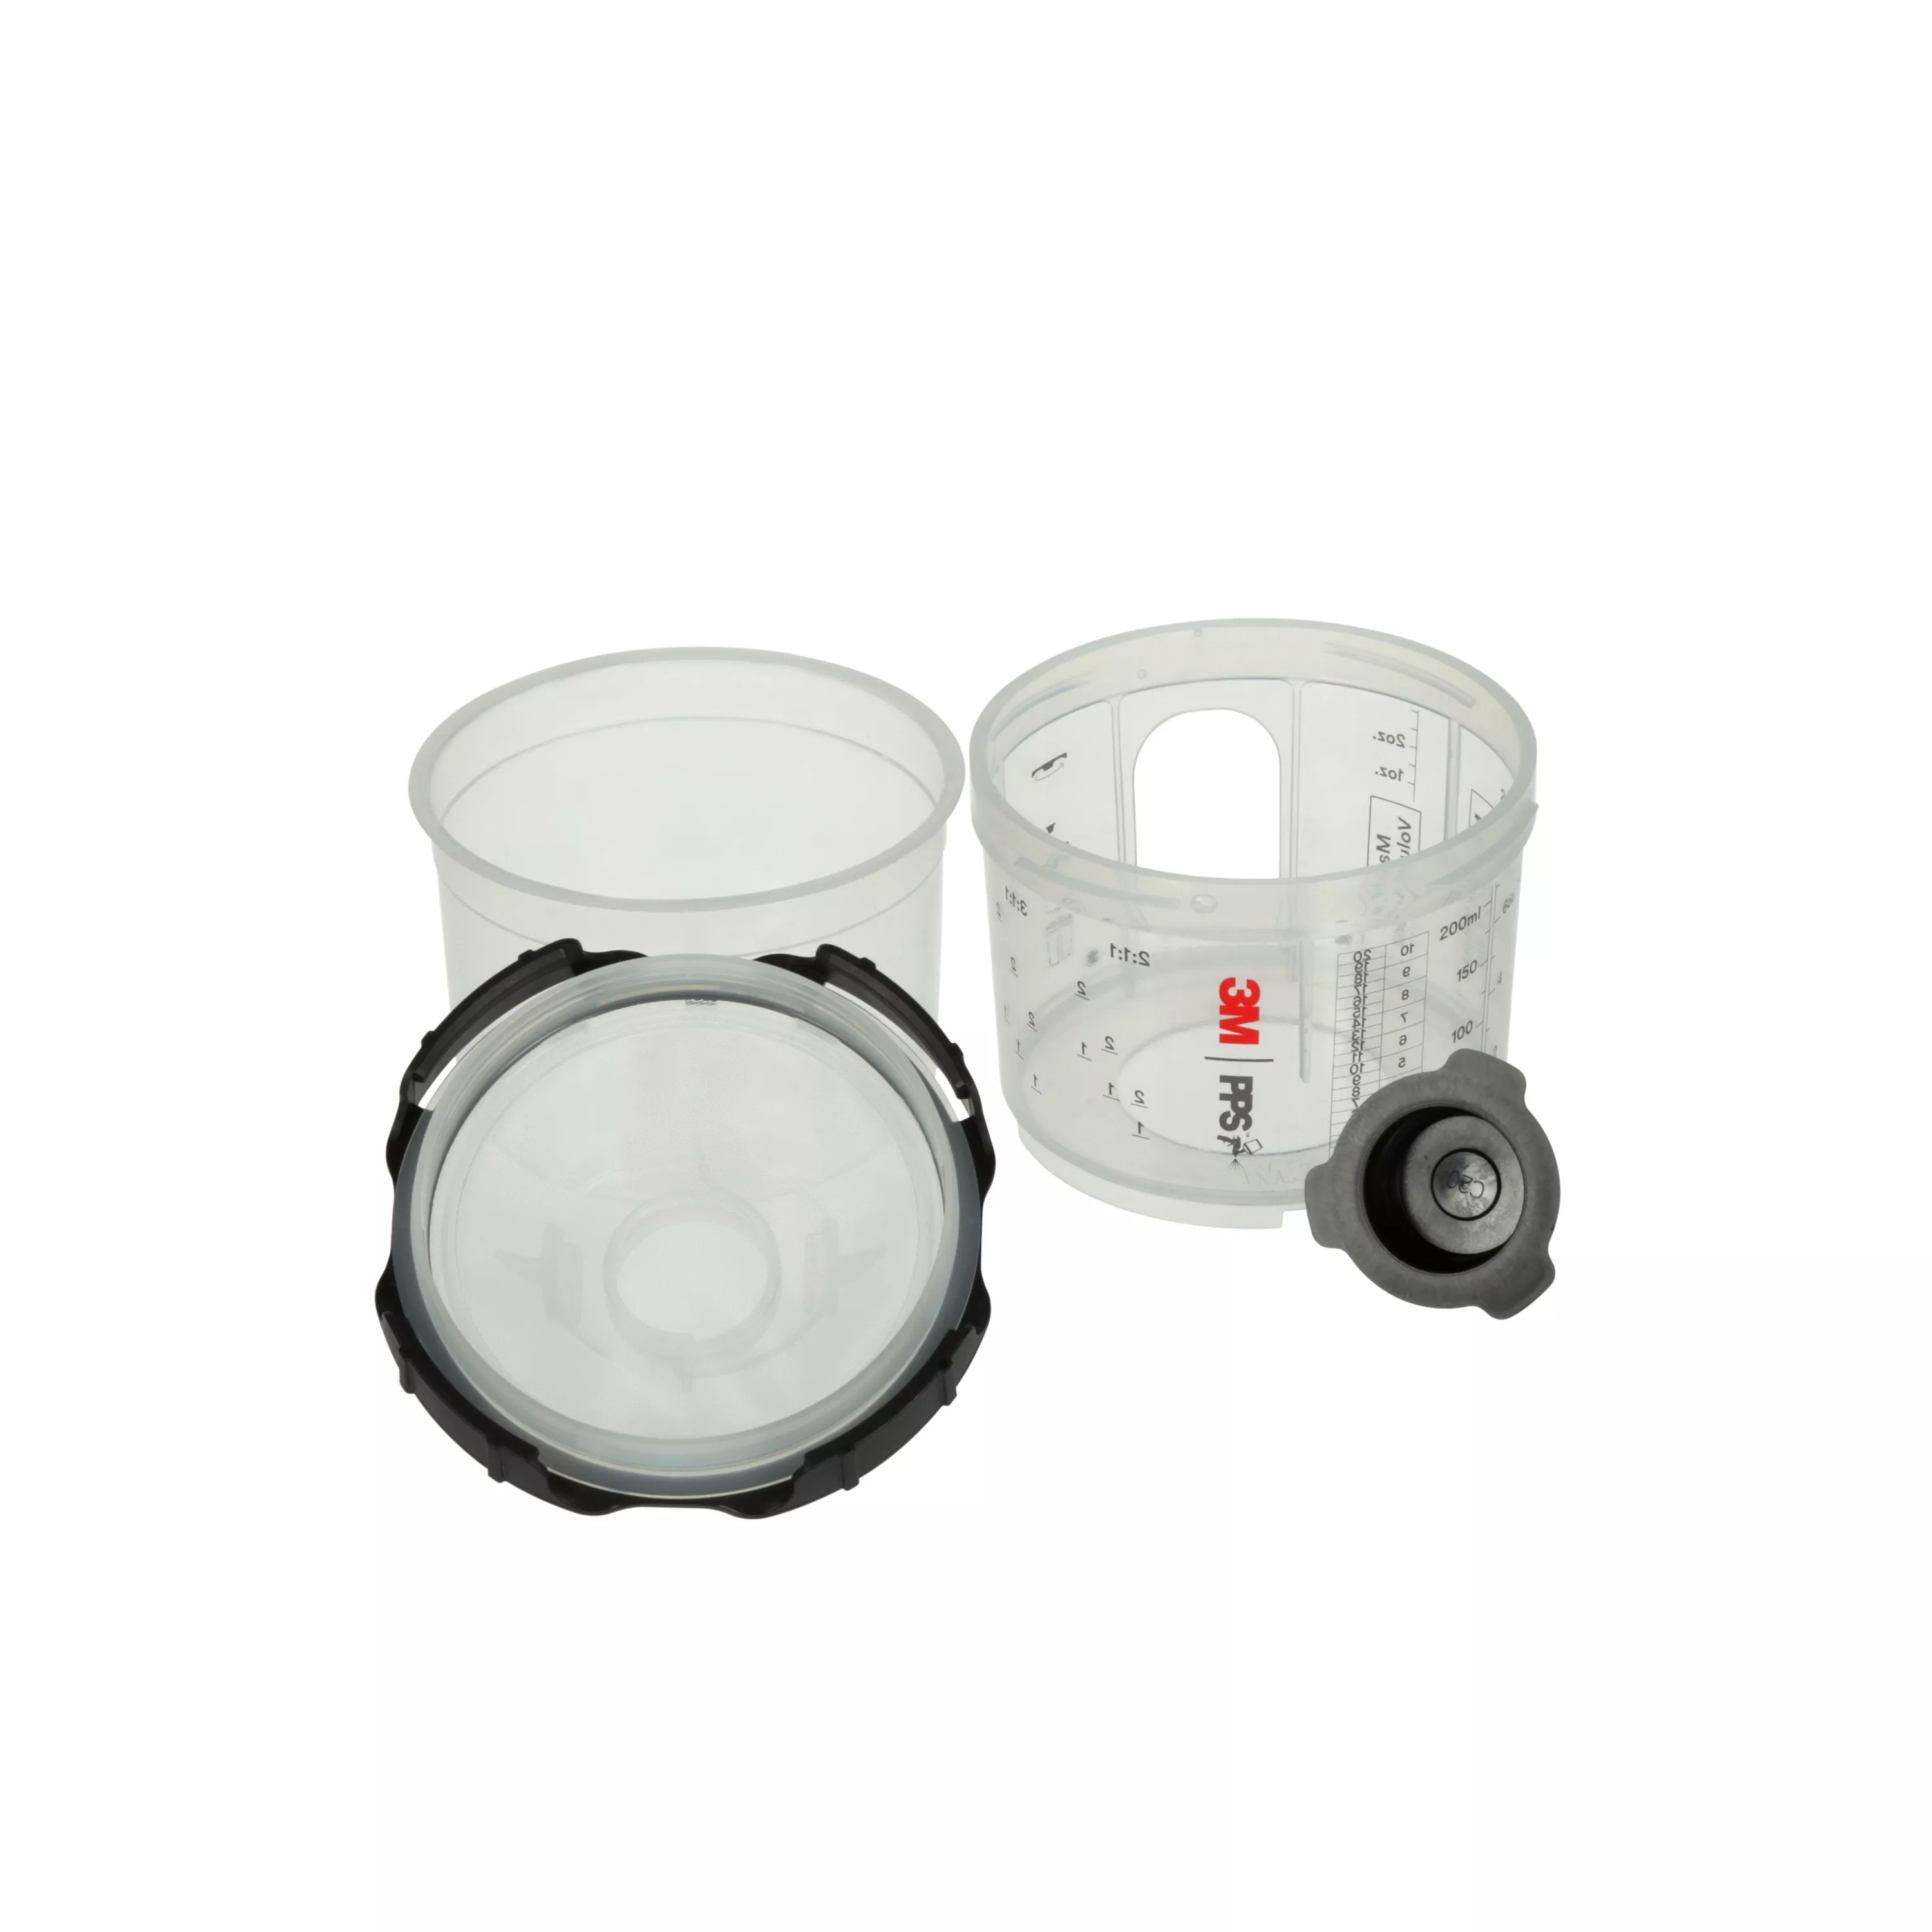 3M™ PPS™ Series 2.0 Spray Cup System Kit 26114, Mini (6.8 fl oz, 200
mL), 200 Micron Filter, 1 Kit/Case